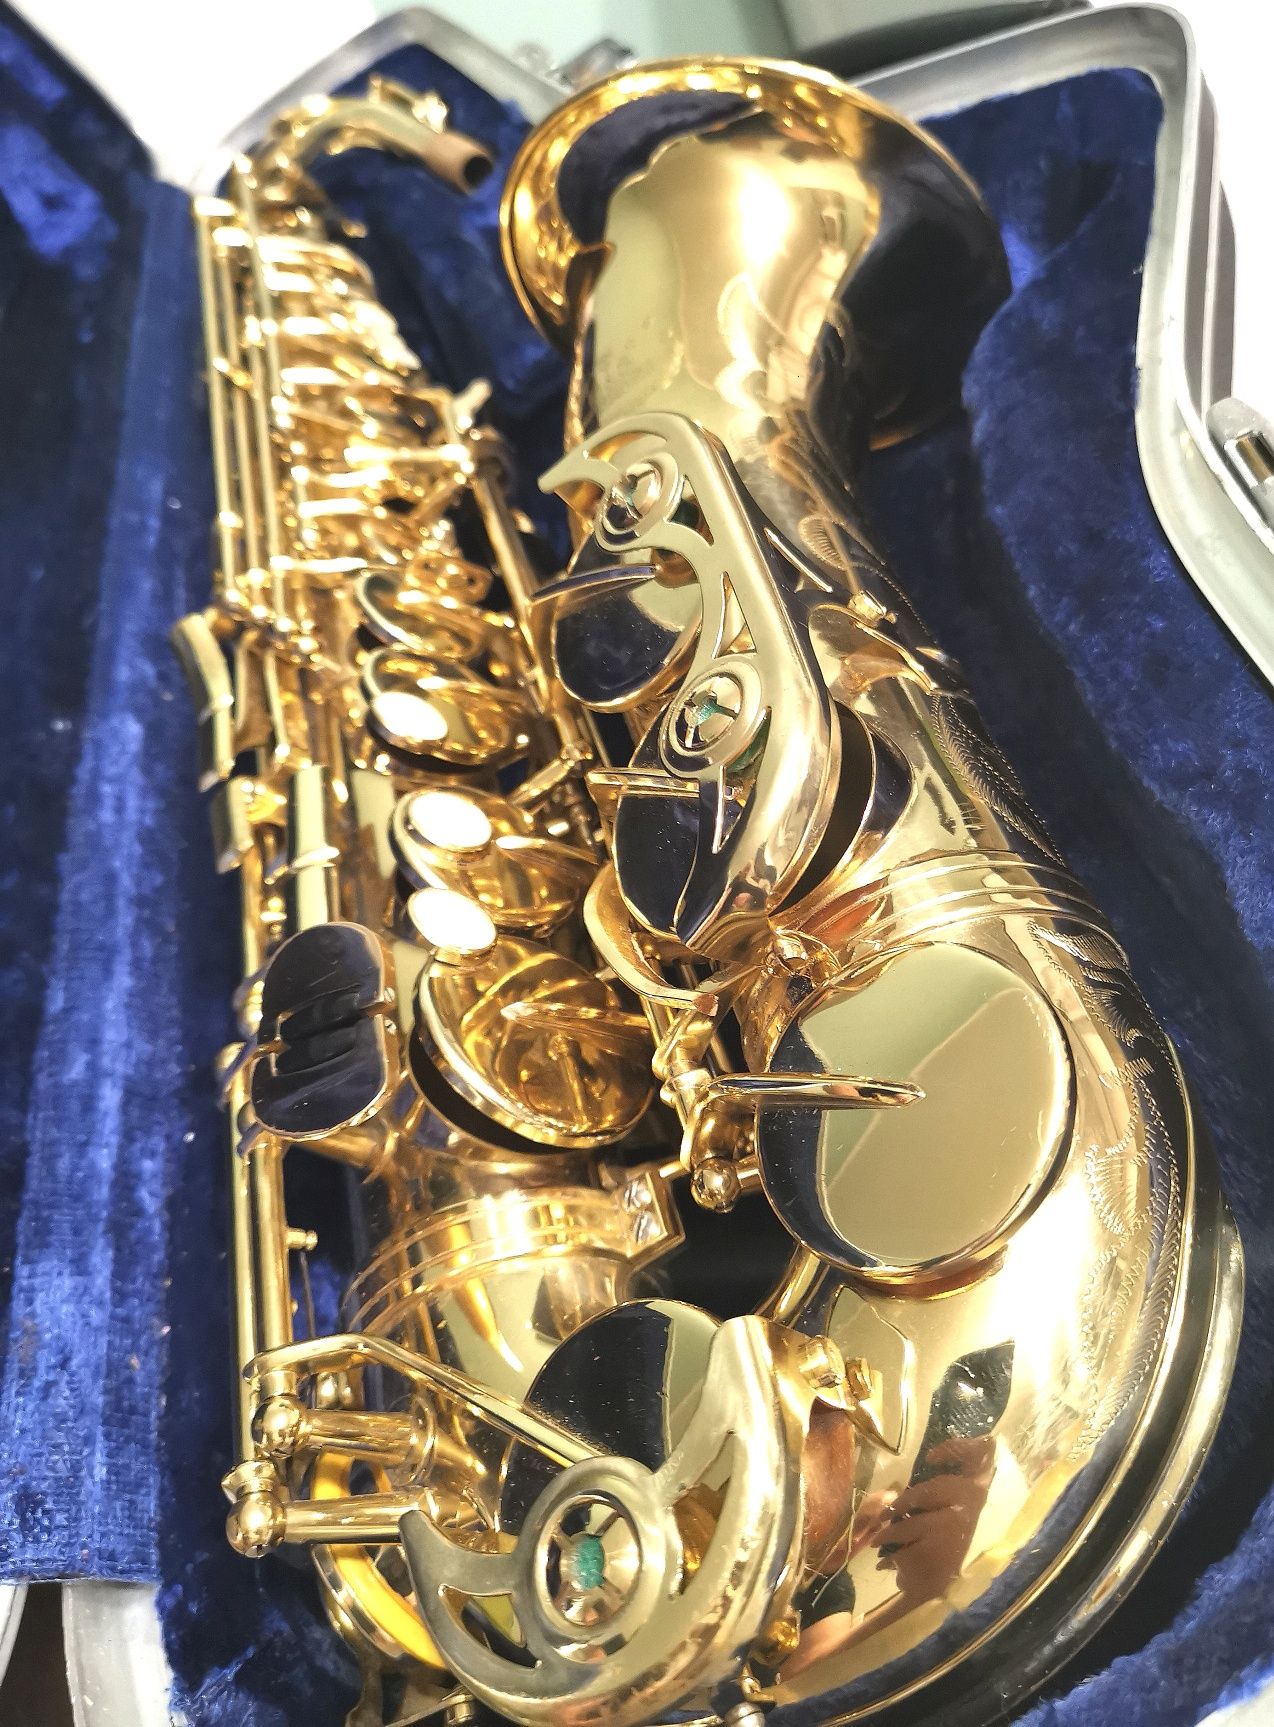 Saksofon altowy B&S model 2001 - seria profesjonalna.